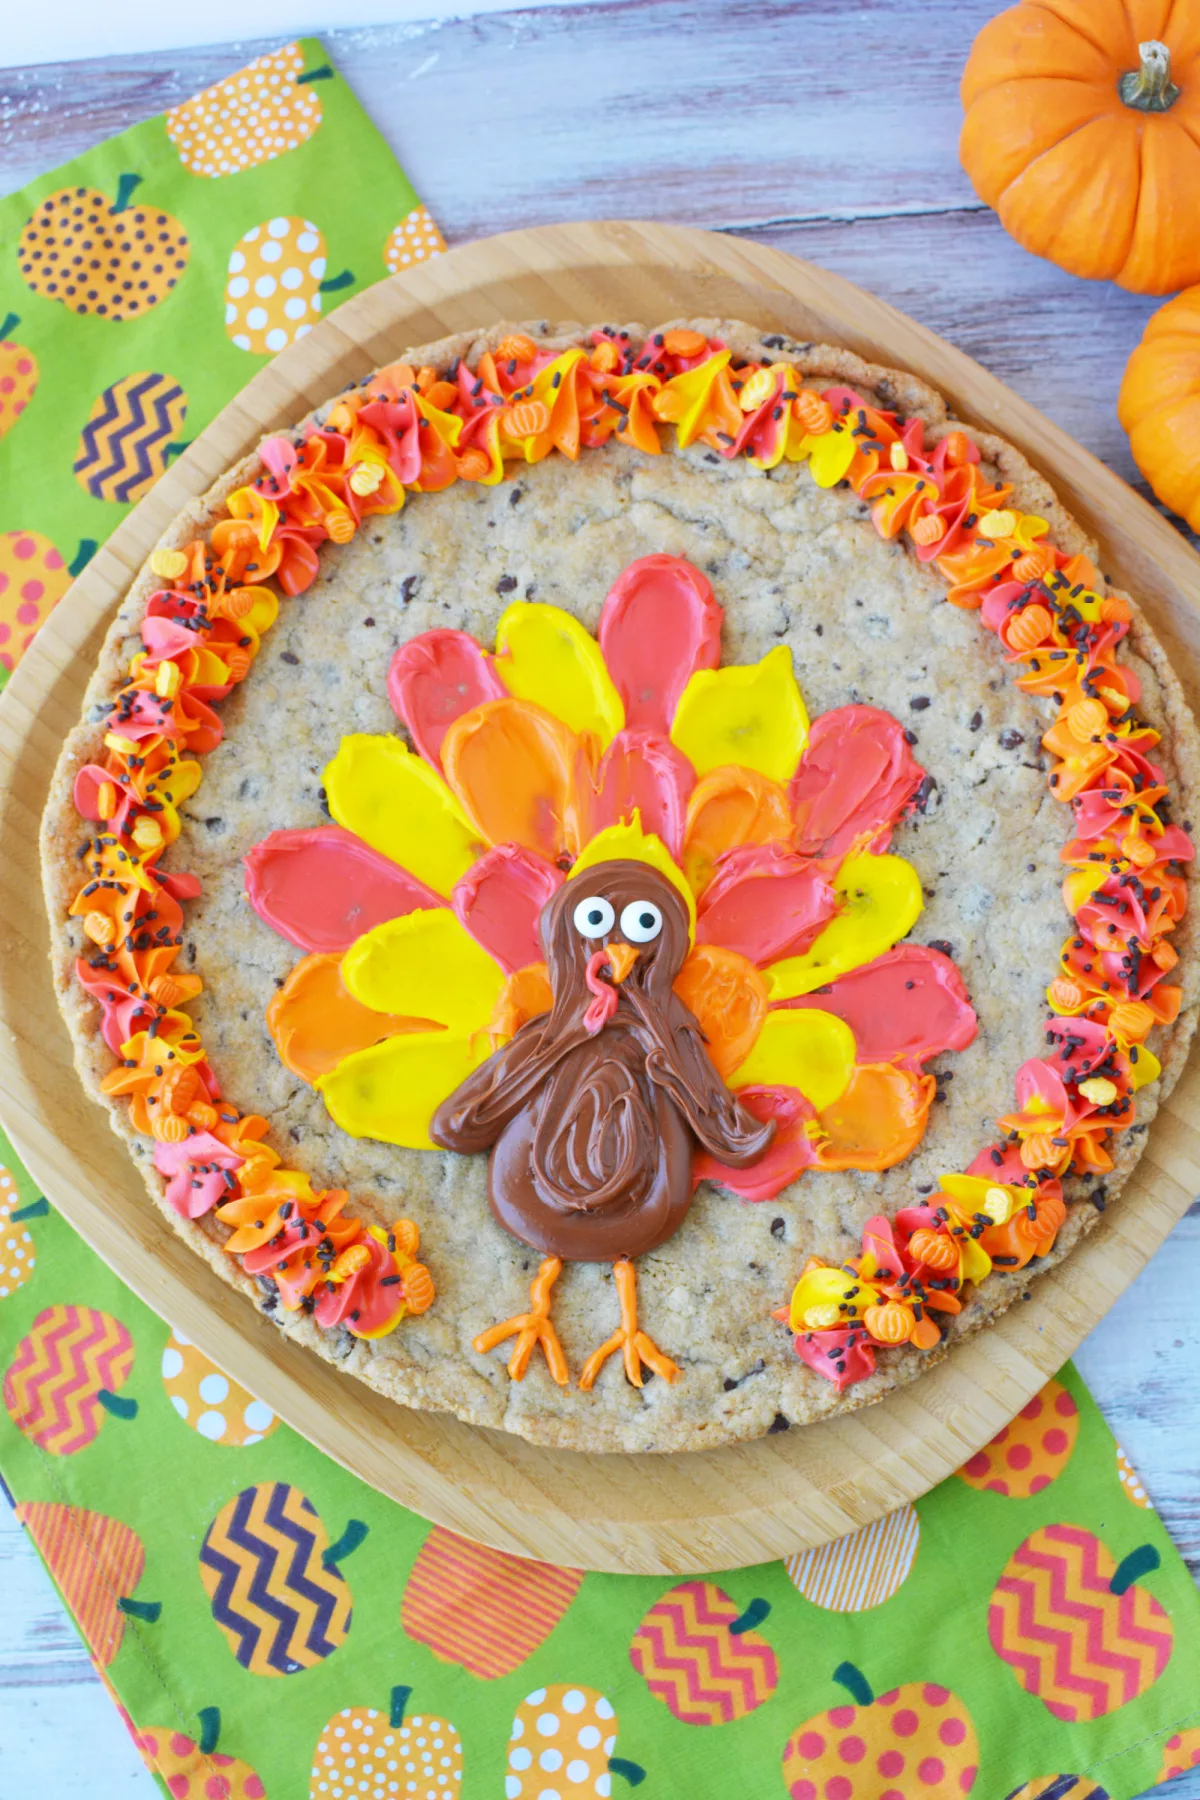 https://therebelchick.com/wp-content/uploads/2022/10/Thanksgiving-Giant-Cookie-Cake-Recipe-jpg.webp